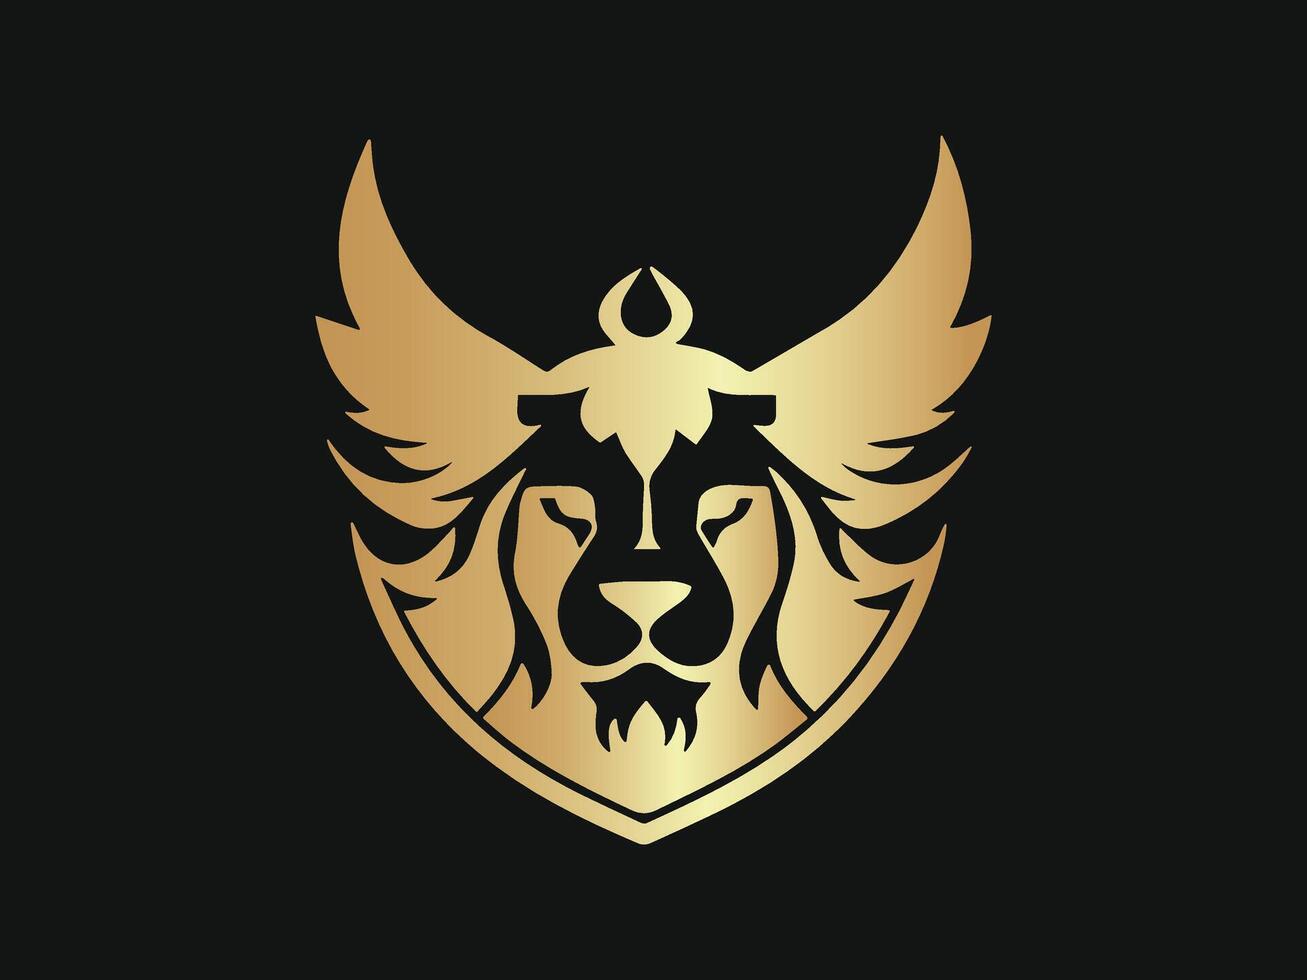 Angel lion logo design icon symbol vector illustration.